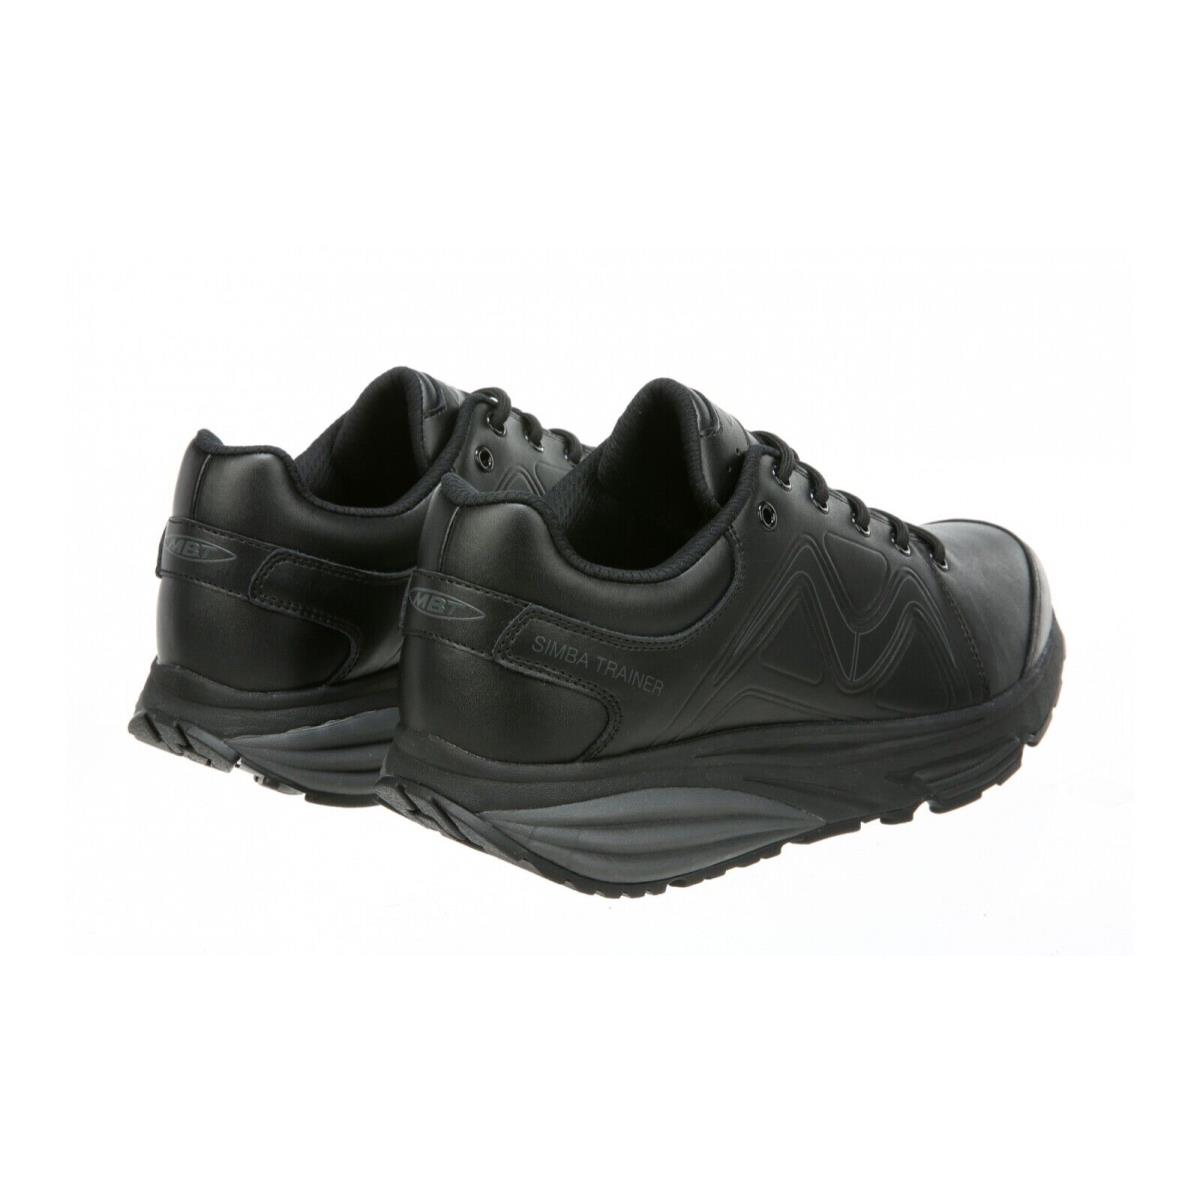 MBT shoes SIMBA TRAINER - Black 0